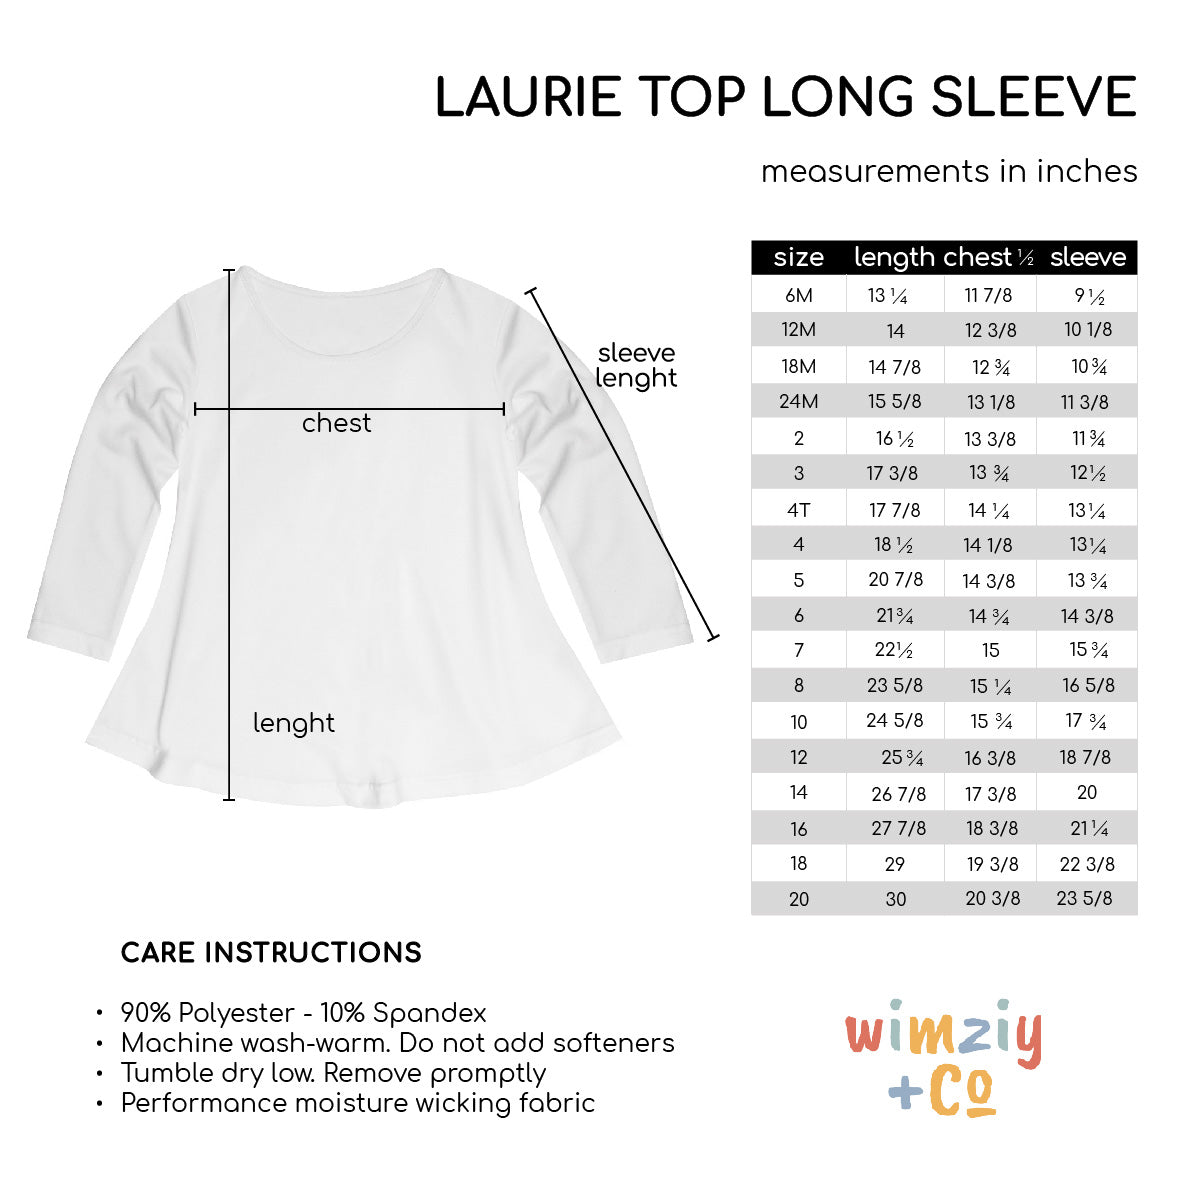 Llamacorn Colors Stripes Long Sleeve Laurie Top - Wimziy&Co.